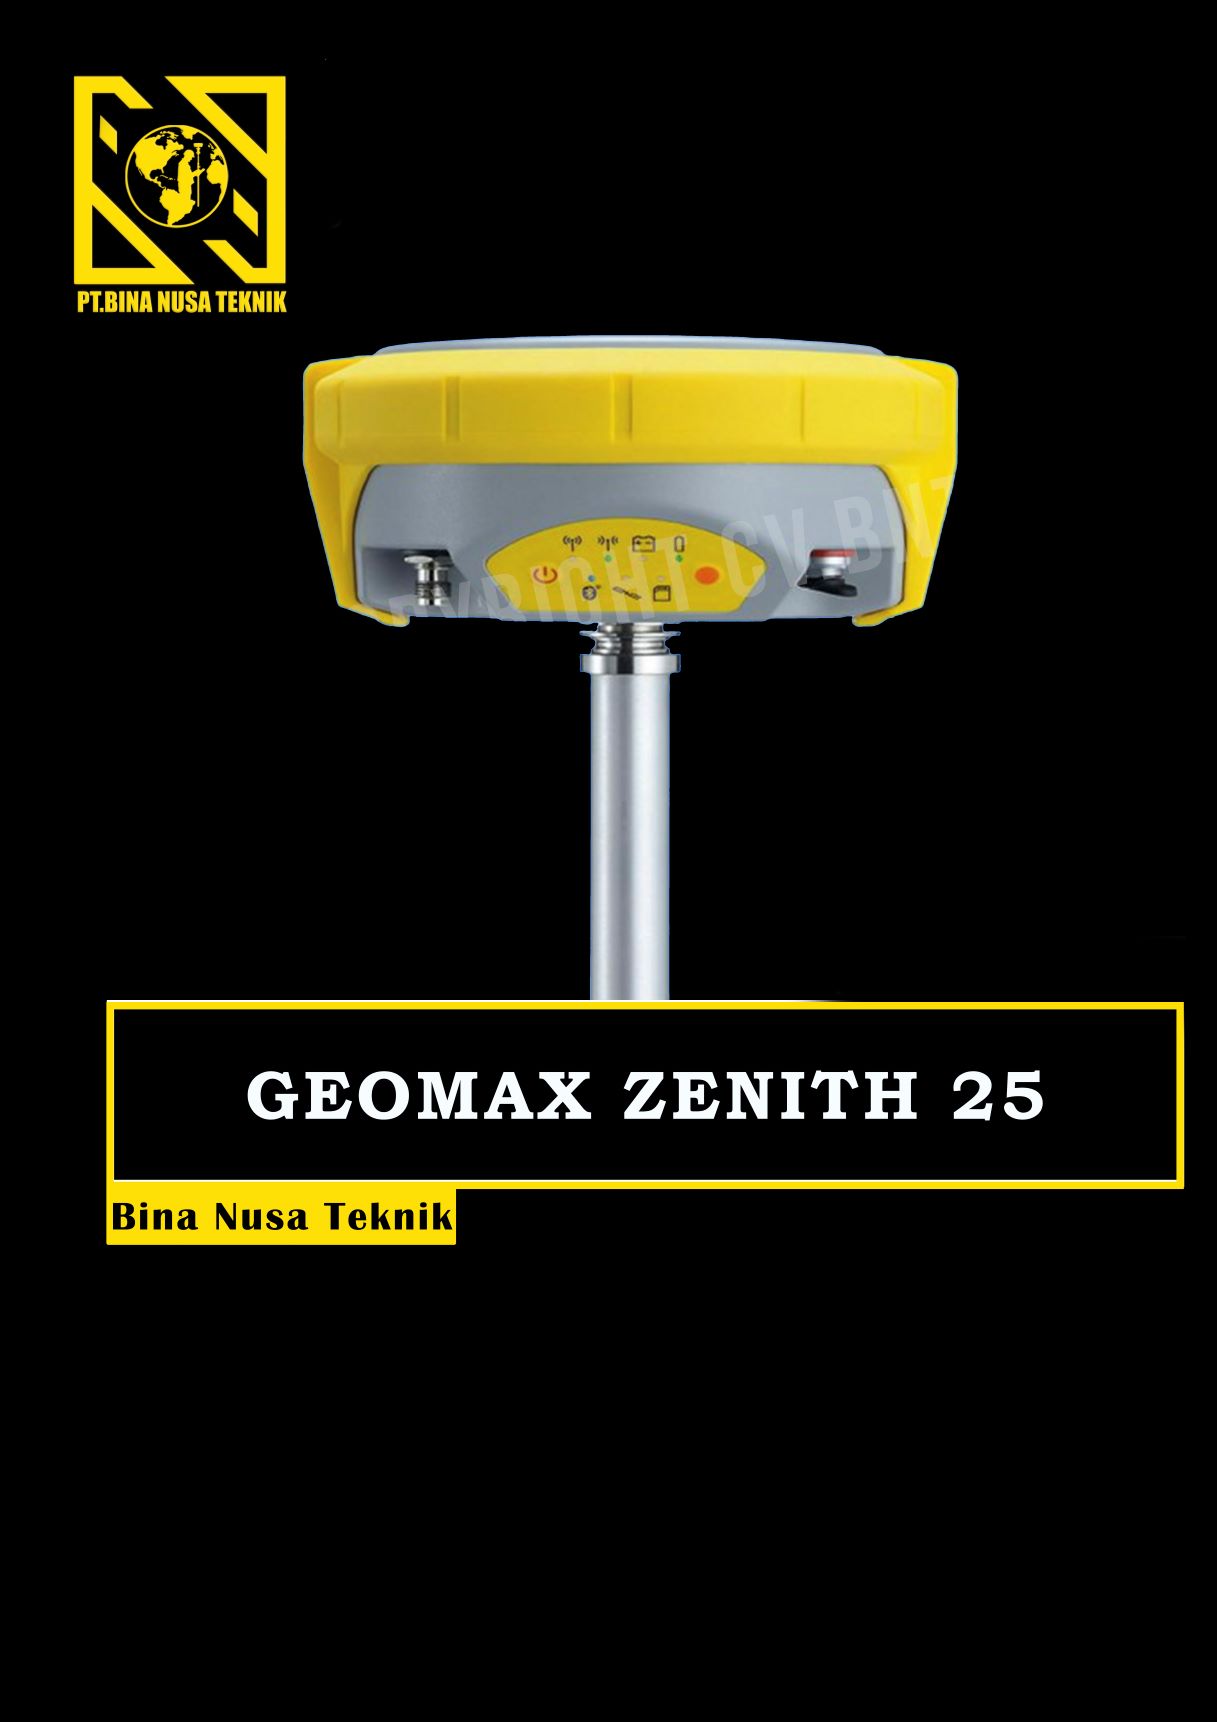 gps rtk gnss geomax zenith 25